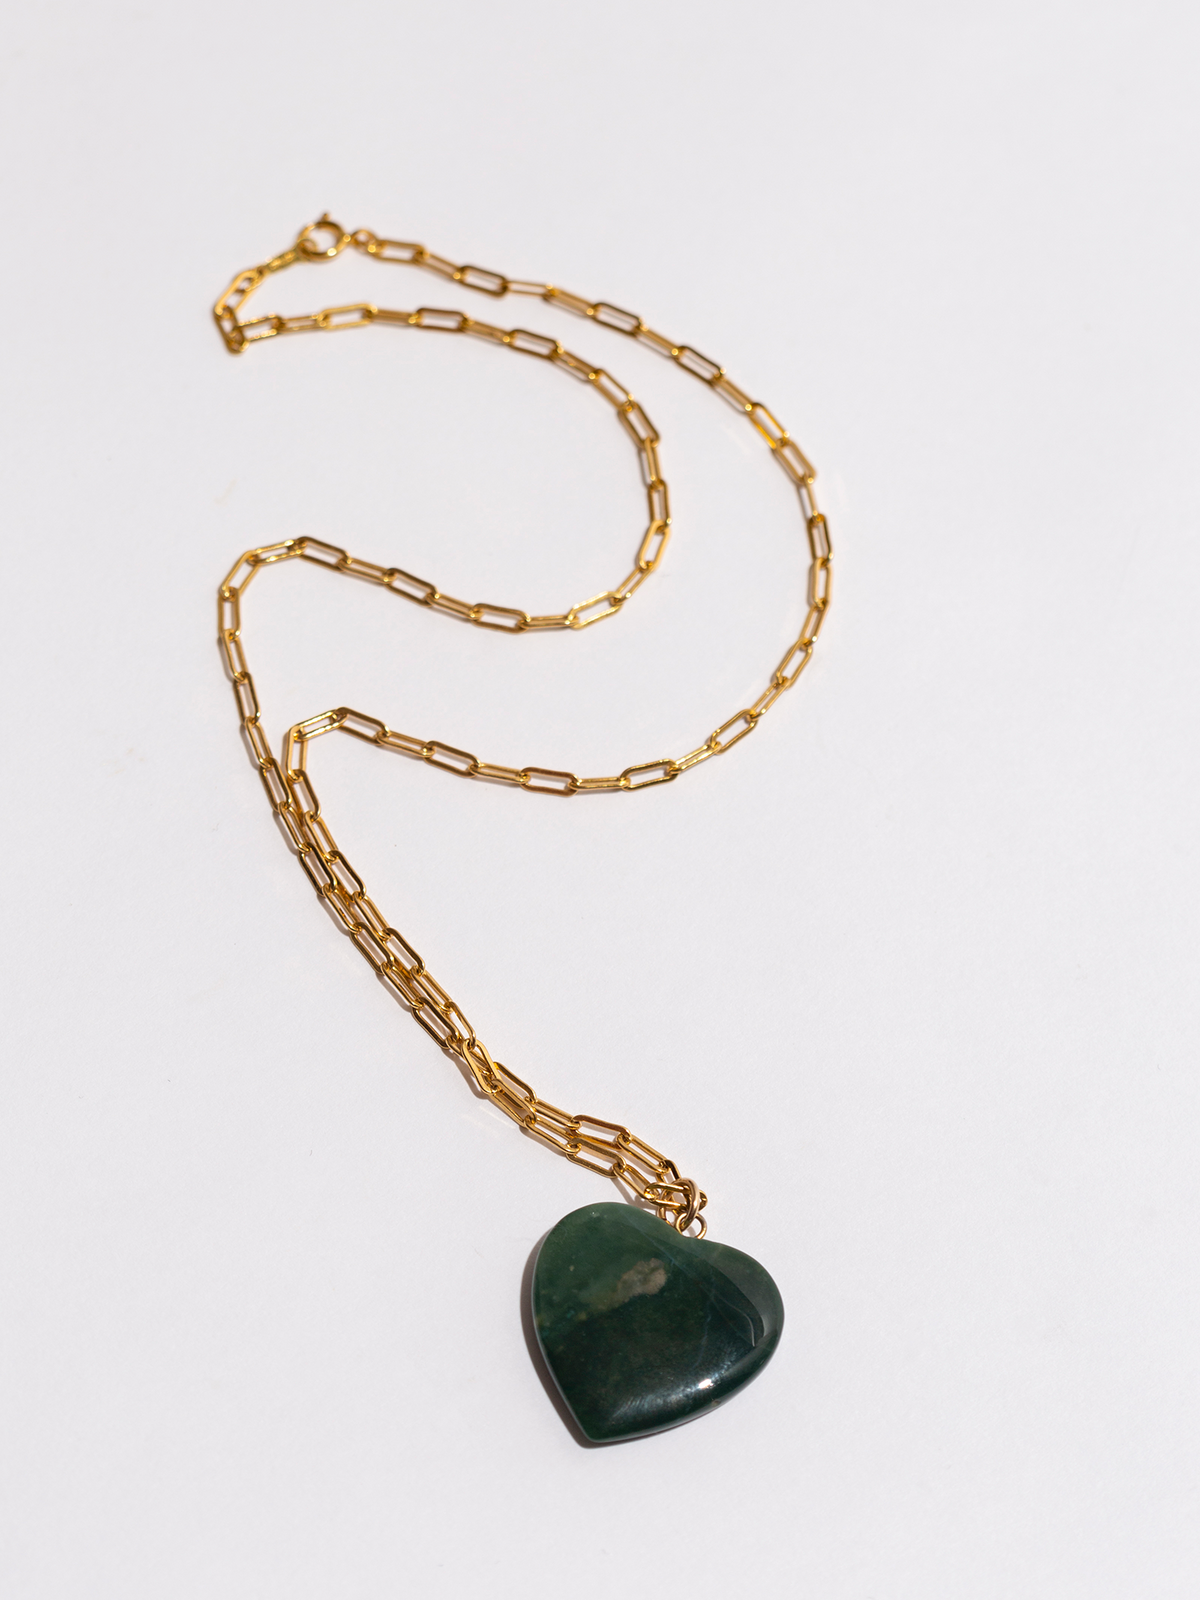 Stevie Green Bloodstone Heart Pendant Necklace